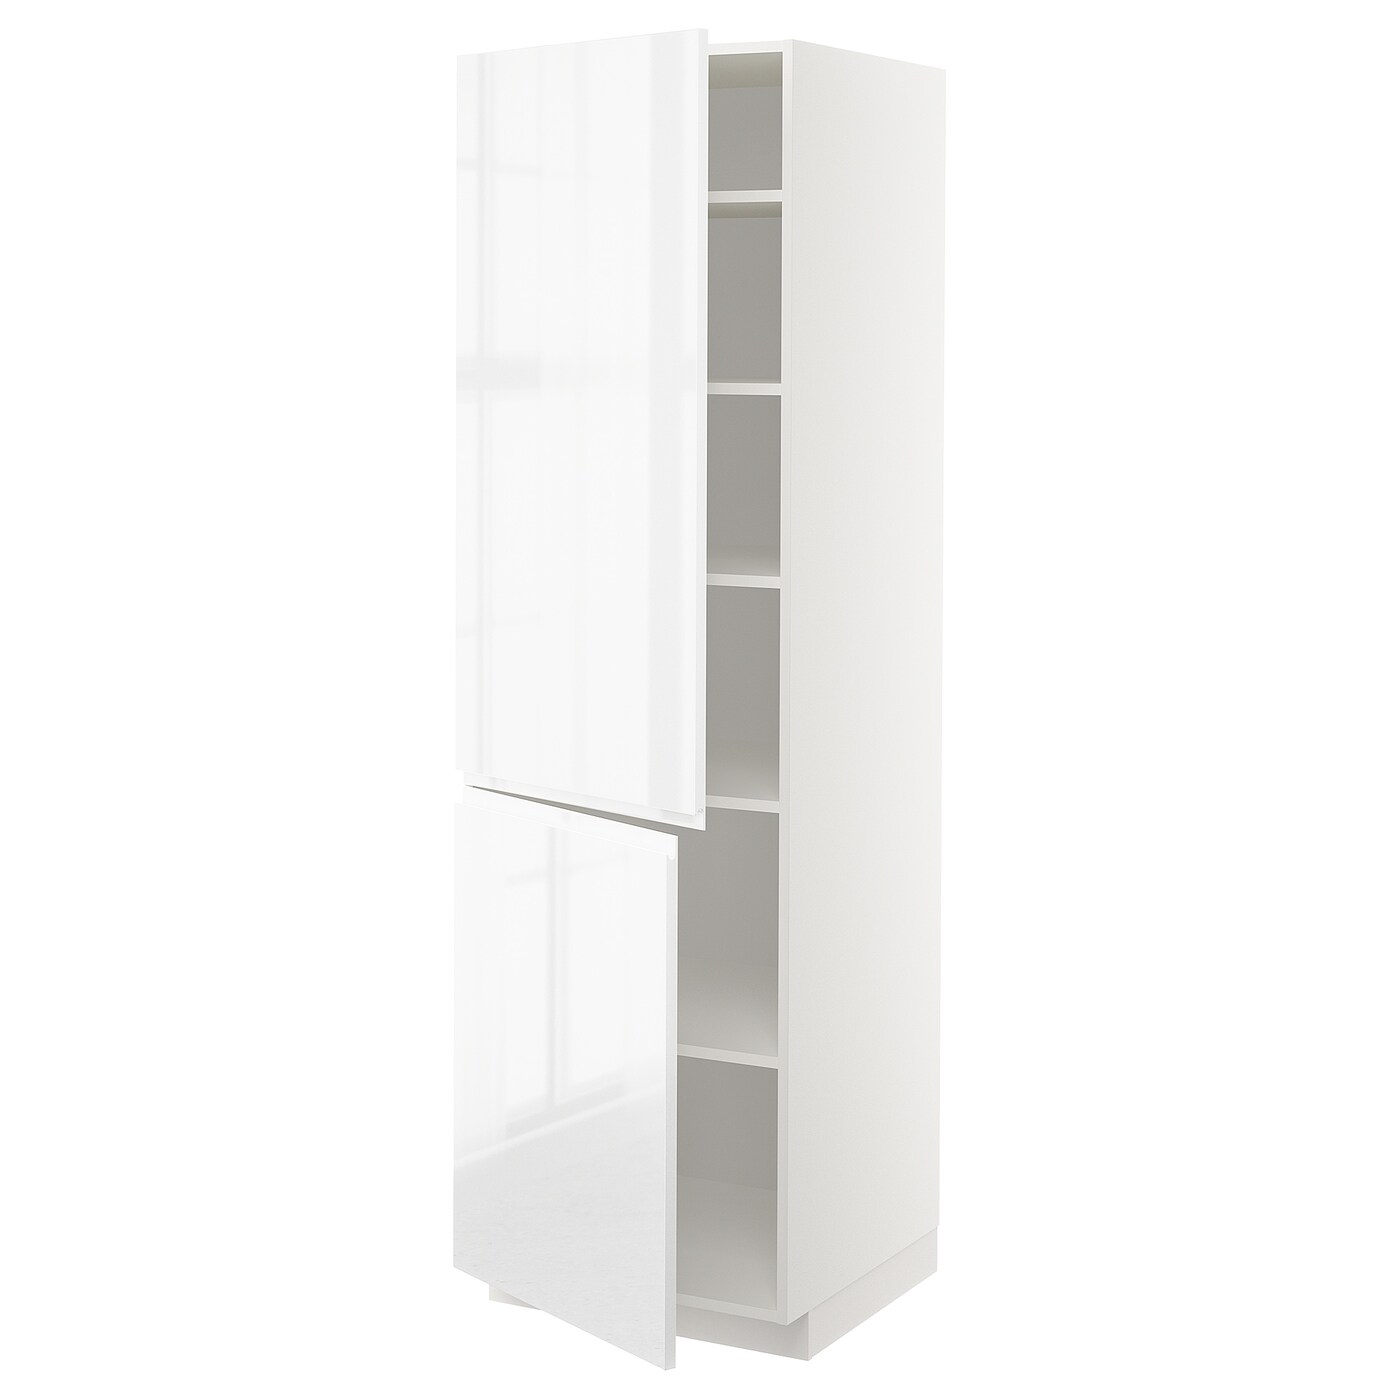 Высокий кухонный шкаф с полками - IKEA METOD/МЕТОД ИКЕА, 200х60х60 см, белый глянцевый